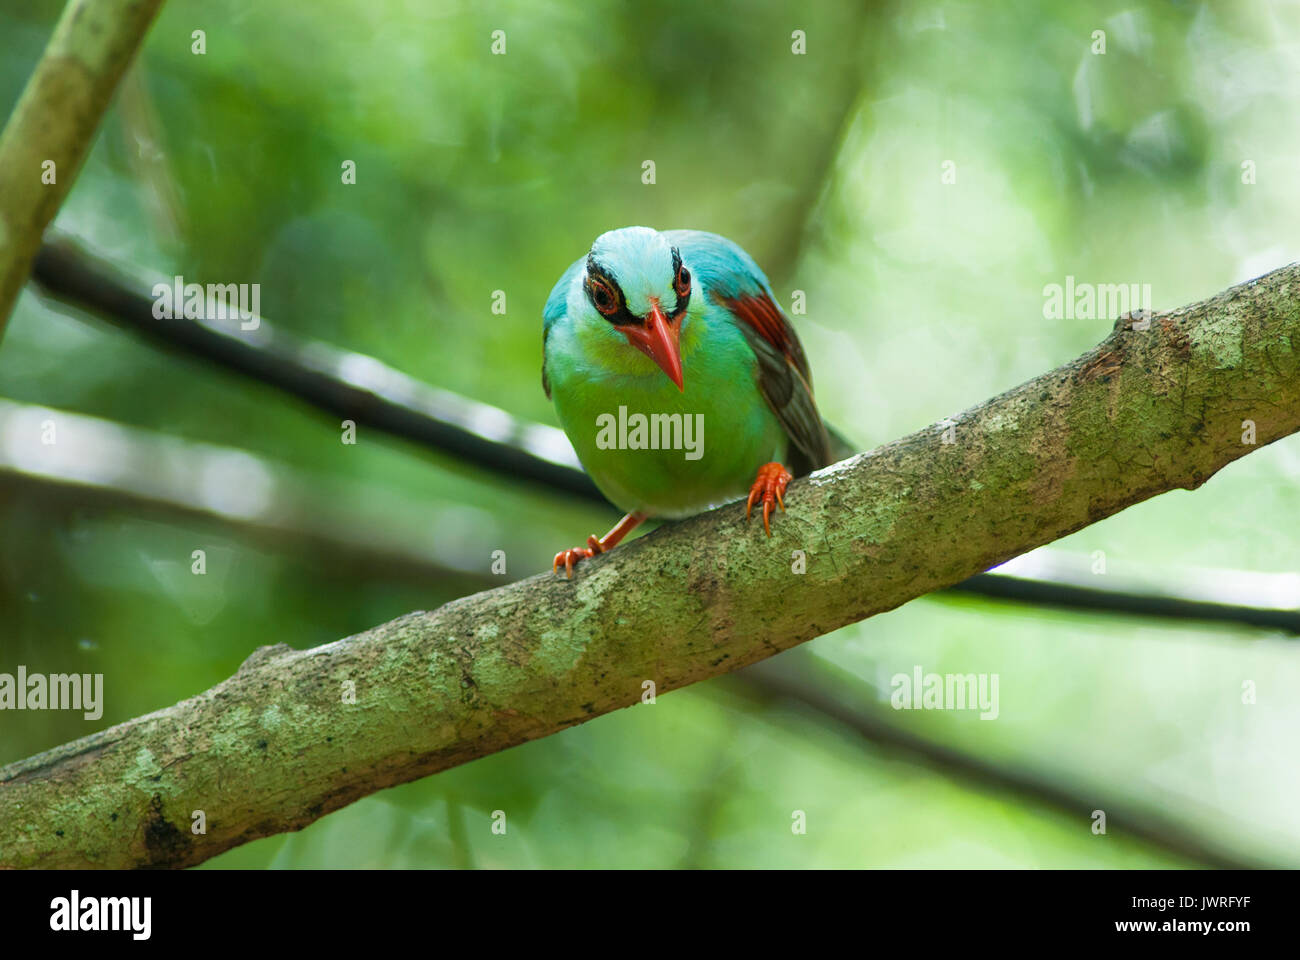 A beautiful bird in the wild Asia. Stock Photo